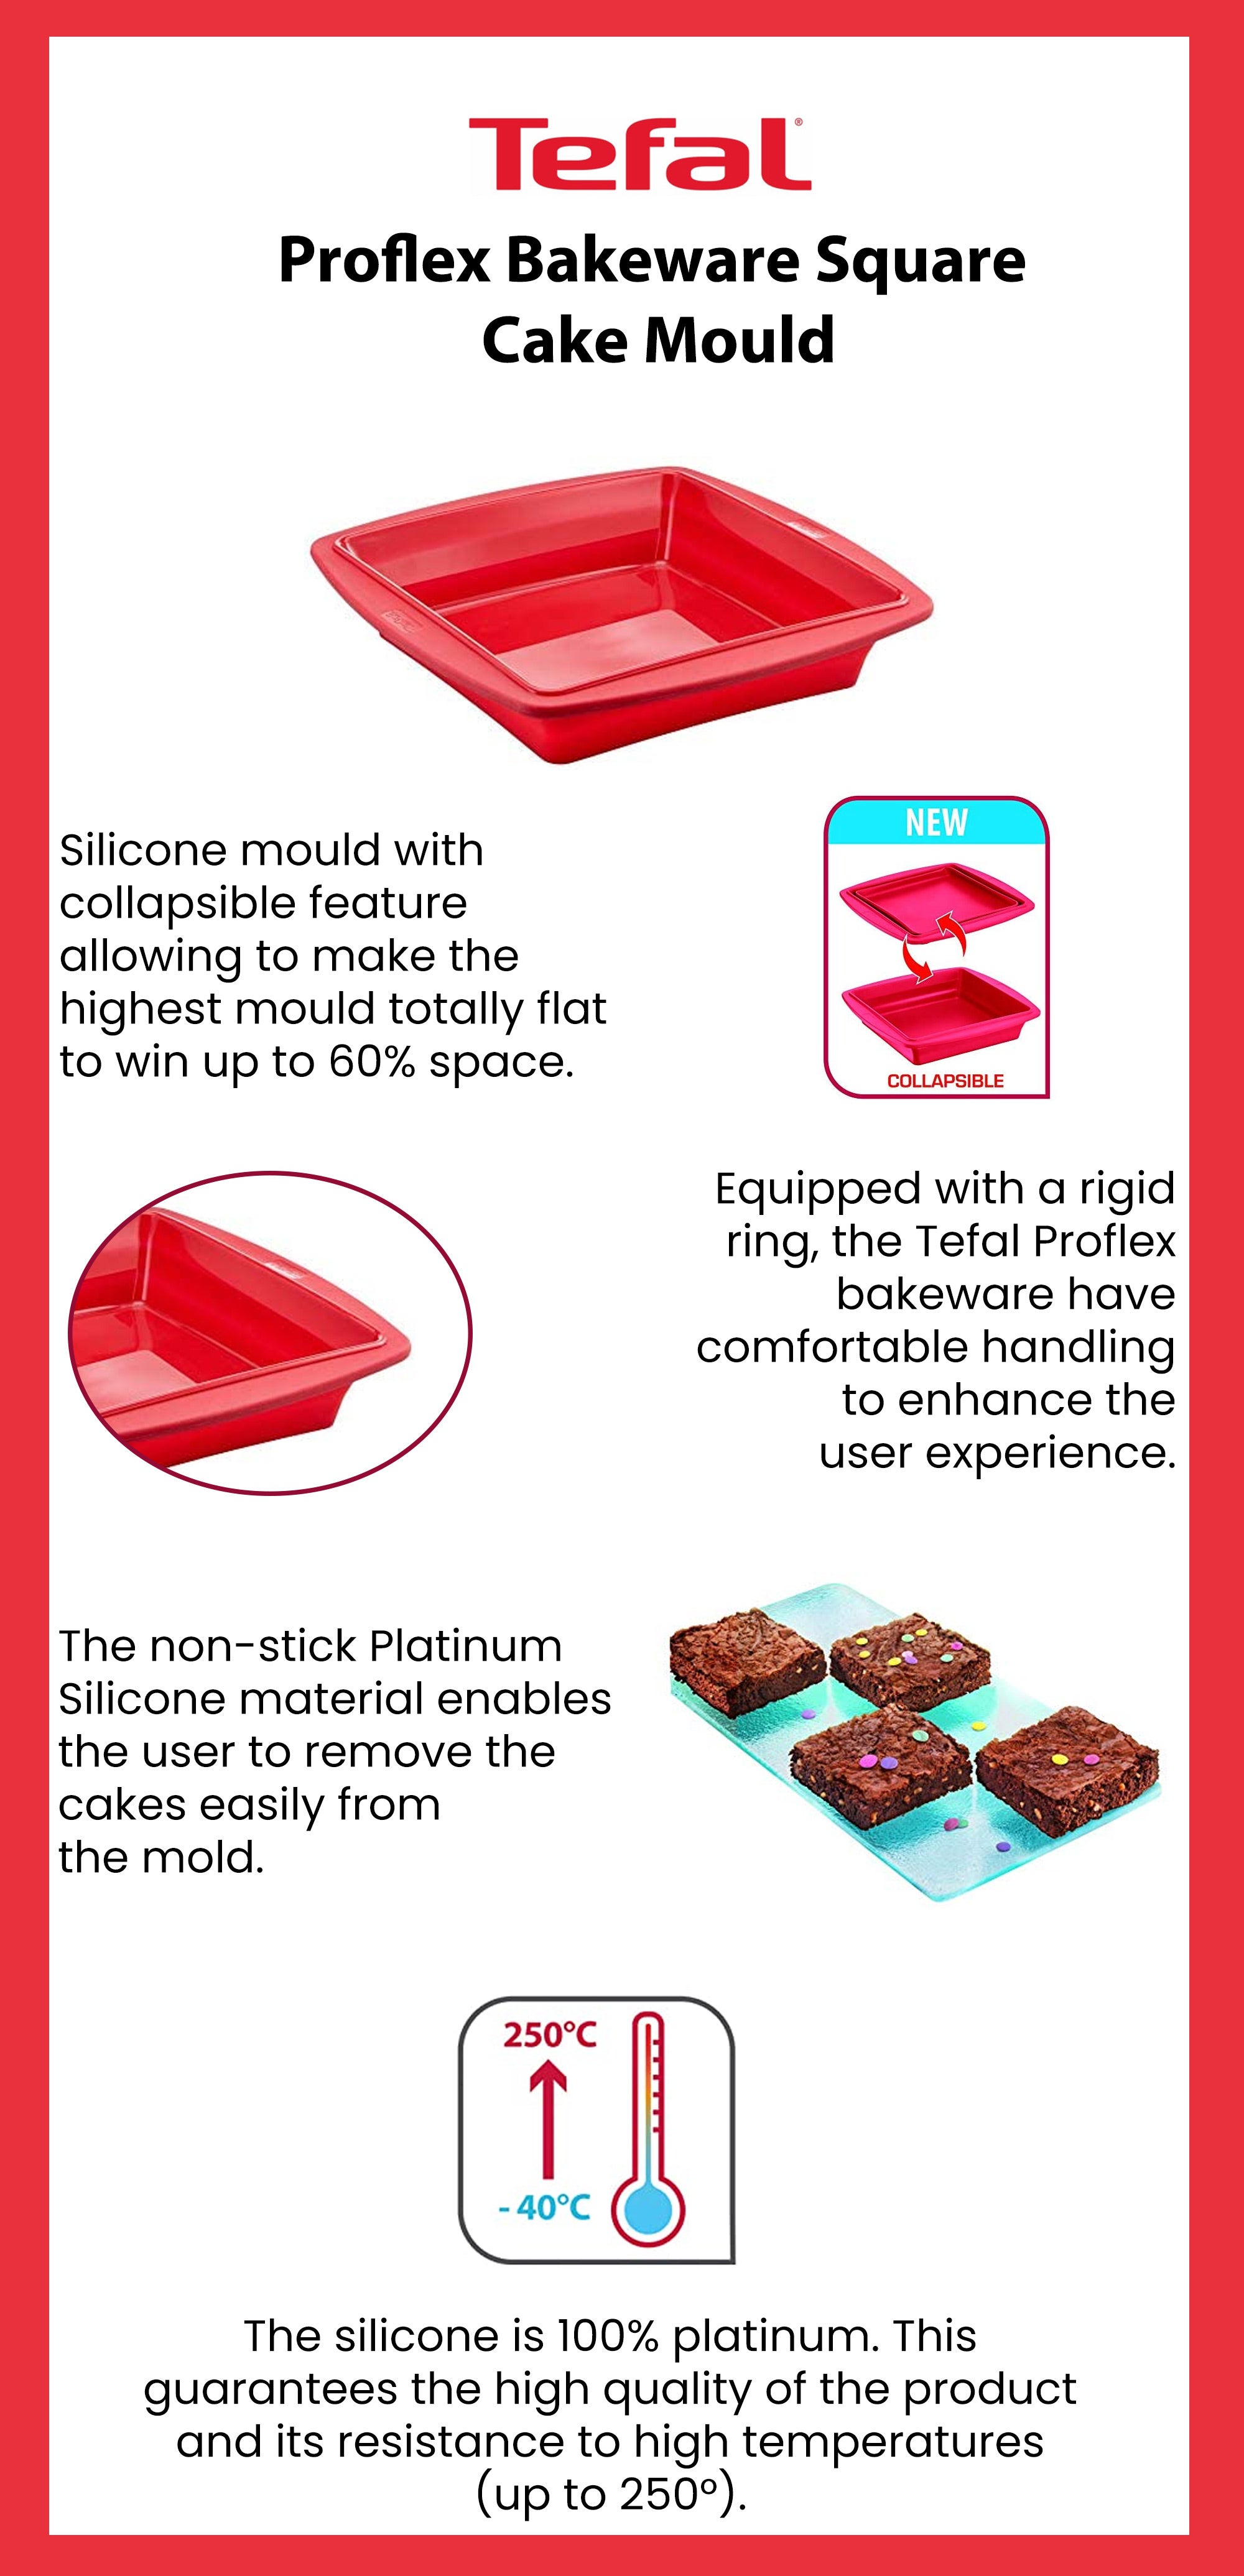 Tefal Proflex Silicone 7 Mini Donuts Bakeware - Red – The Culinarium